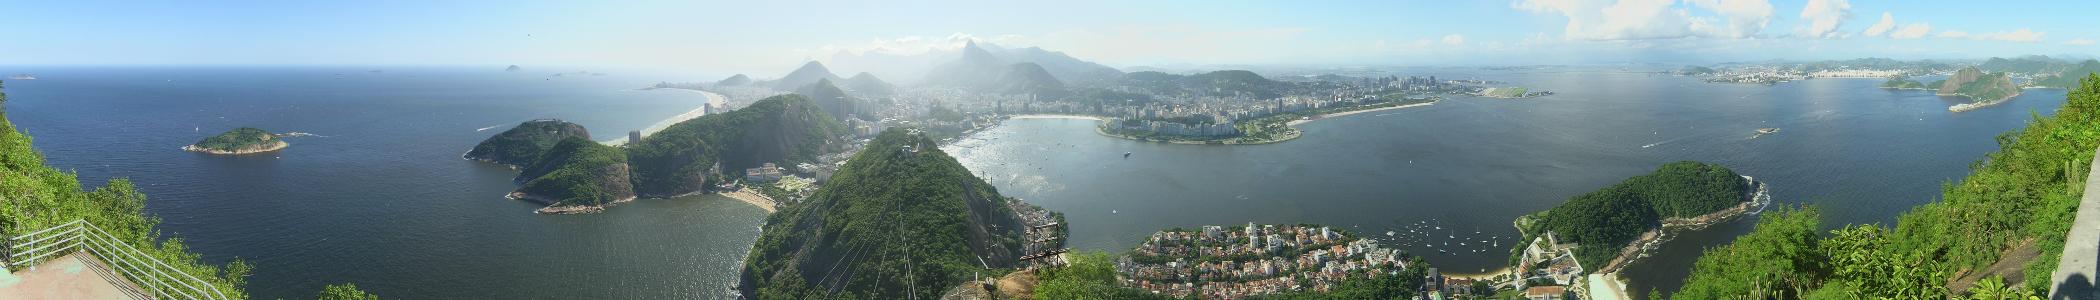 Banner image for Rio de Janeiro on GigsGuide